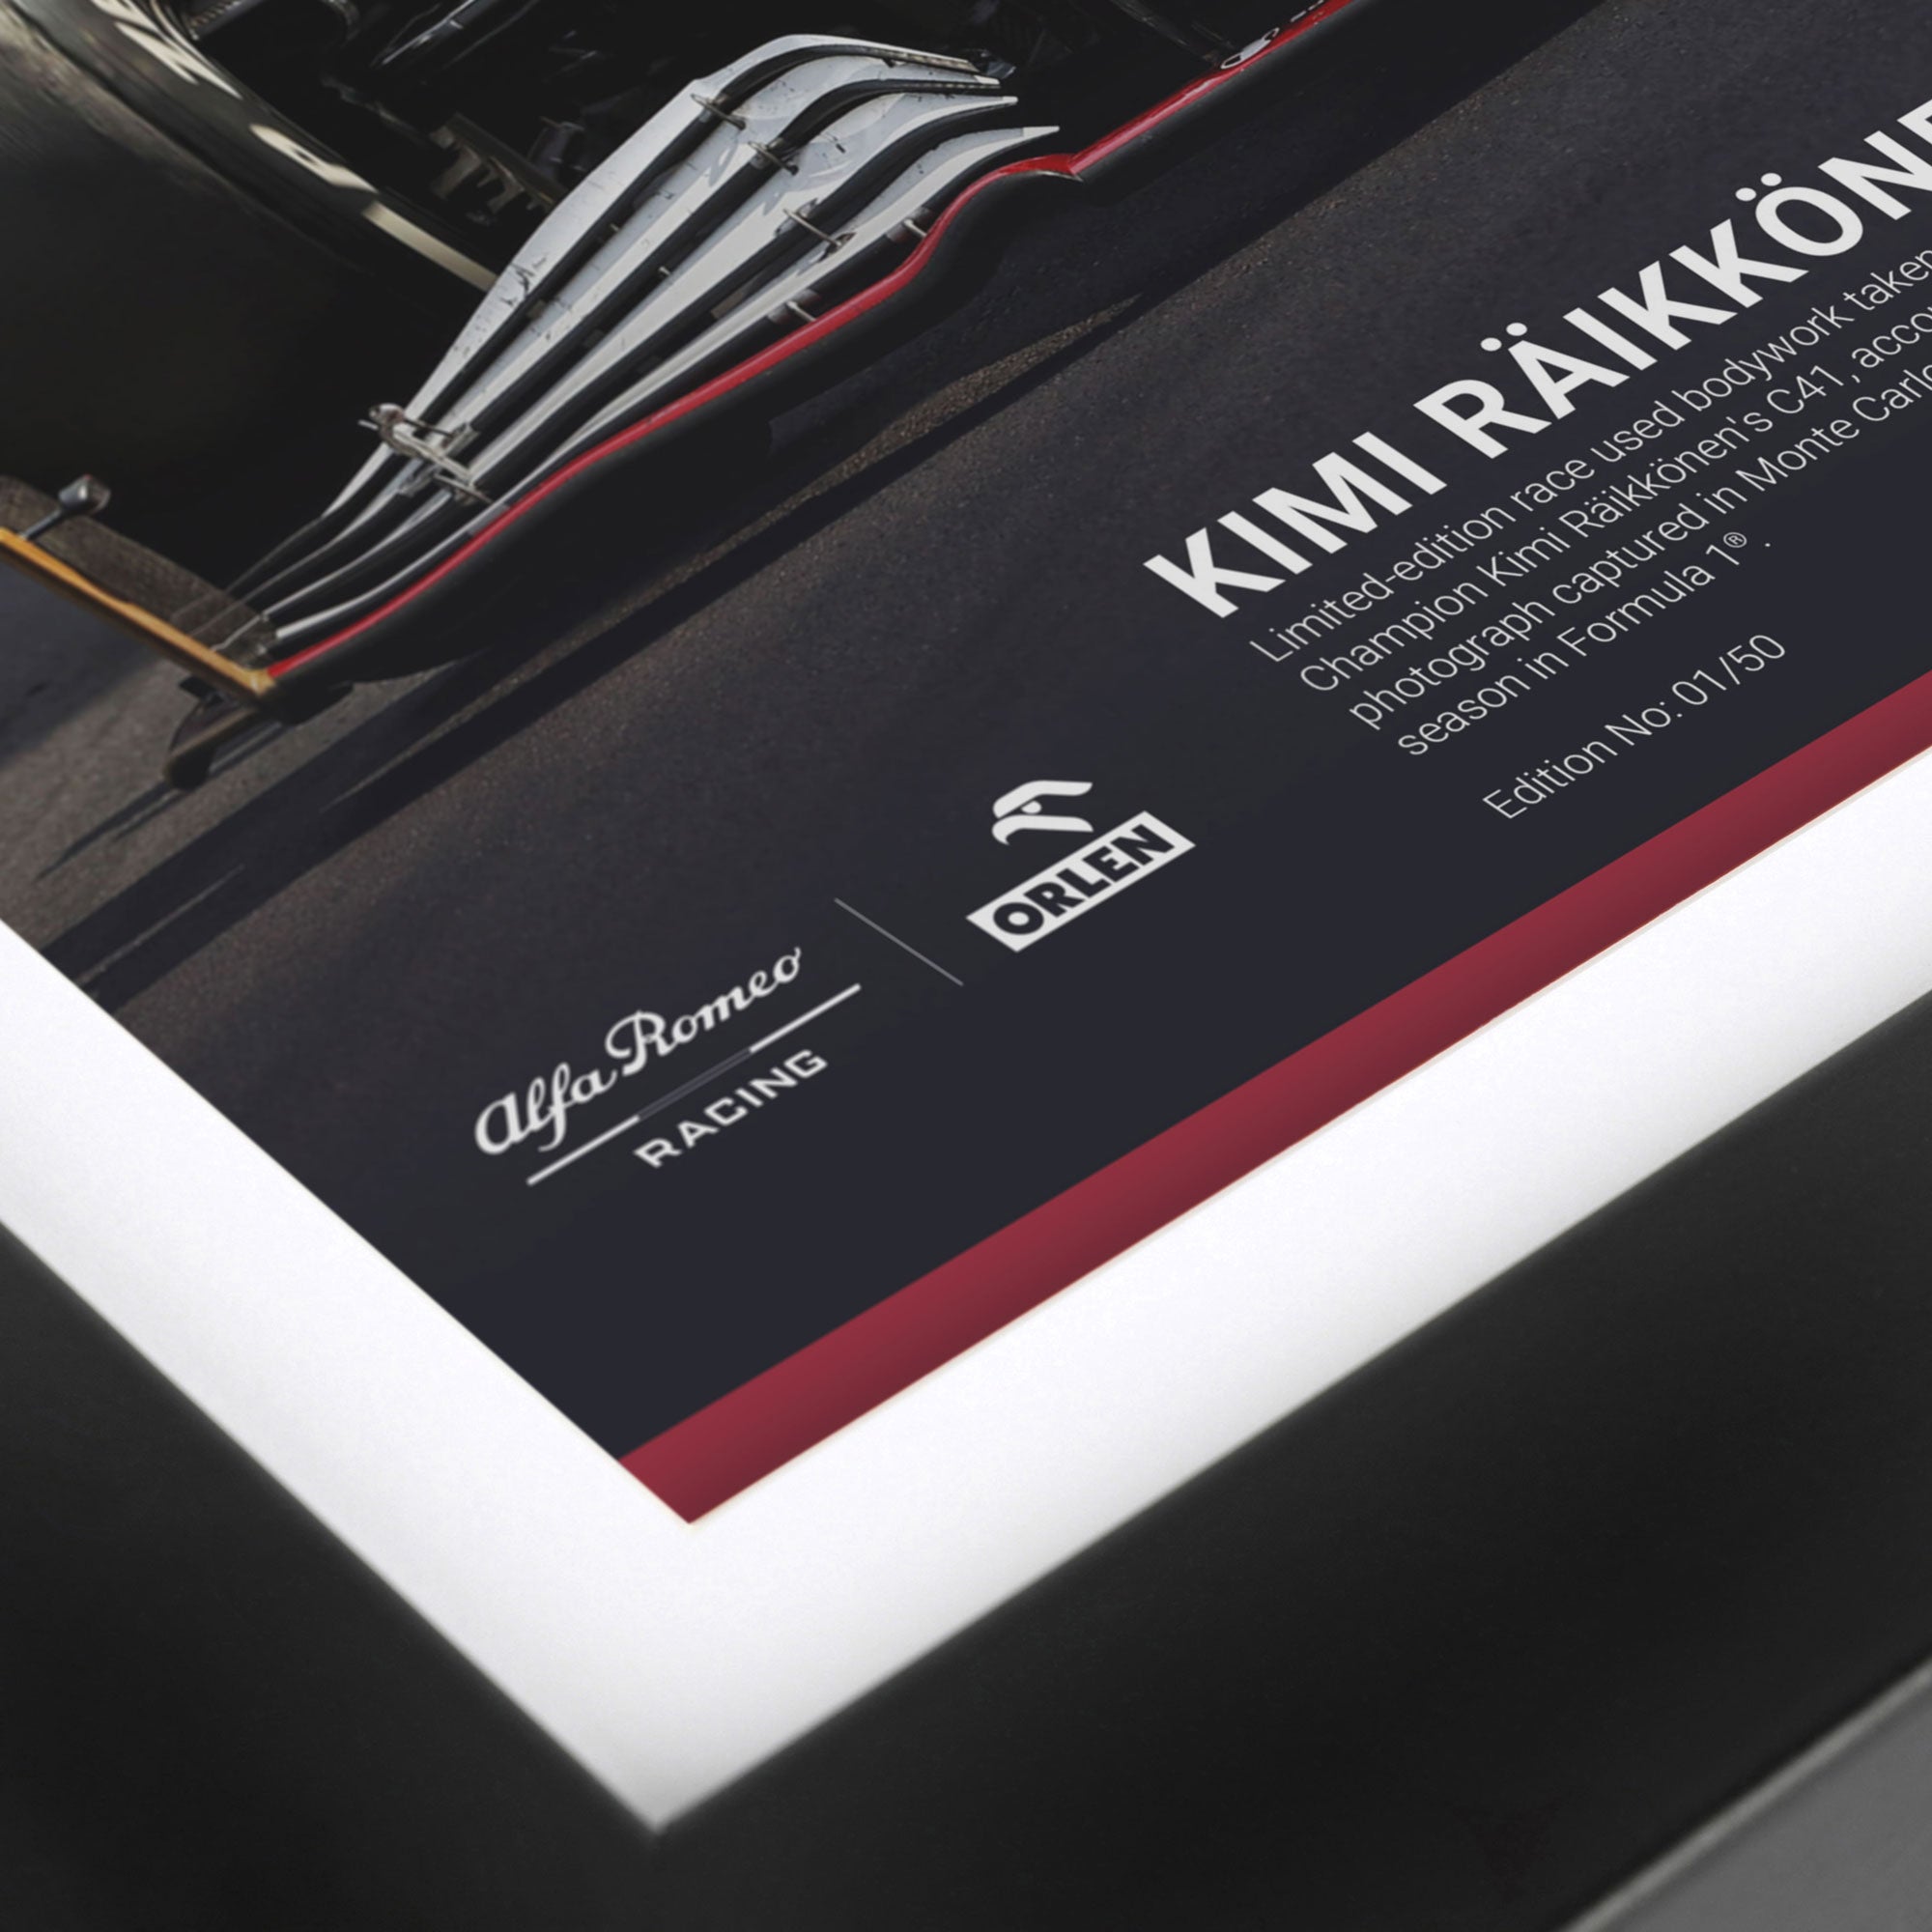 Limited-Edition Kimi Räikkönen 2021 Bodywork & Photo - Monte Carlo